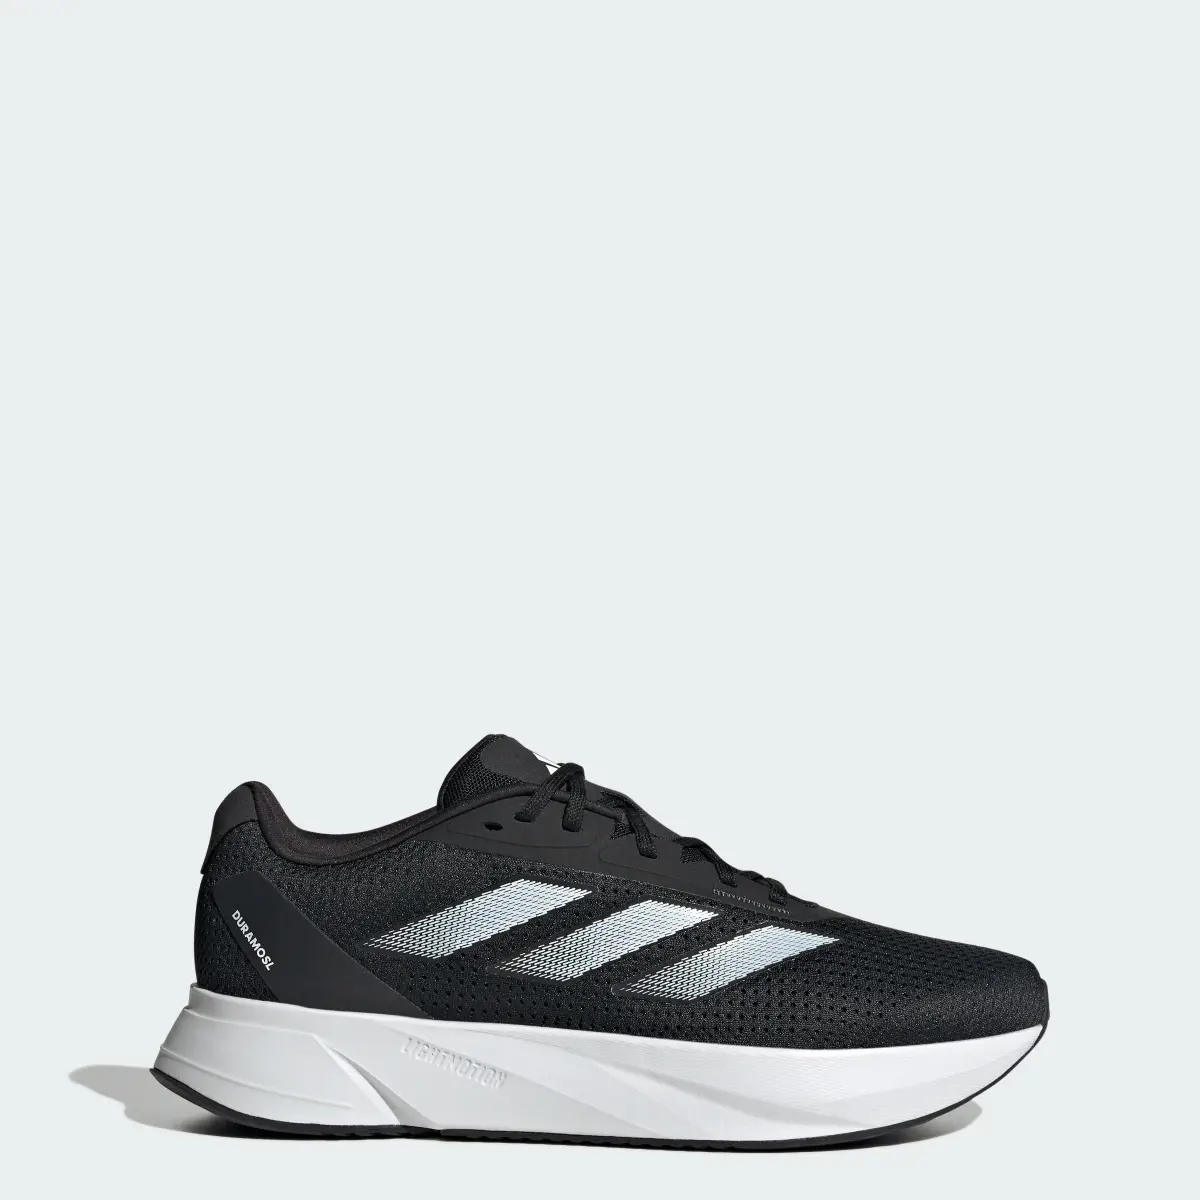 Adidas Duramo SL Wide Running Shoes. 1